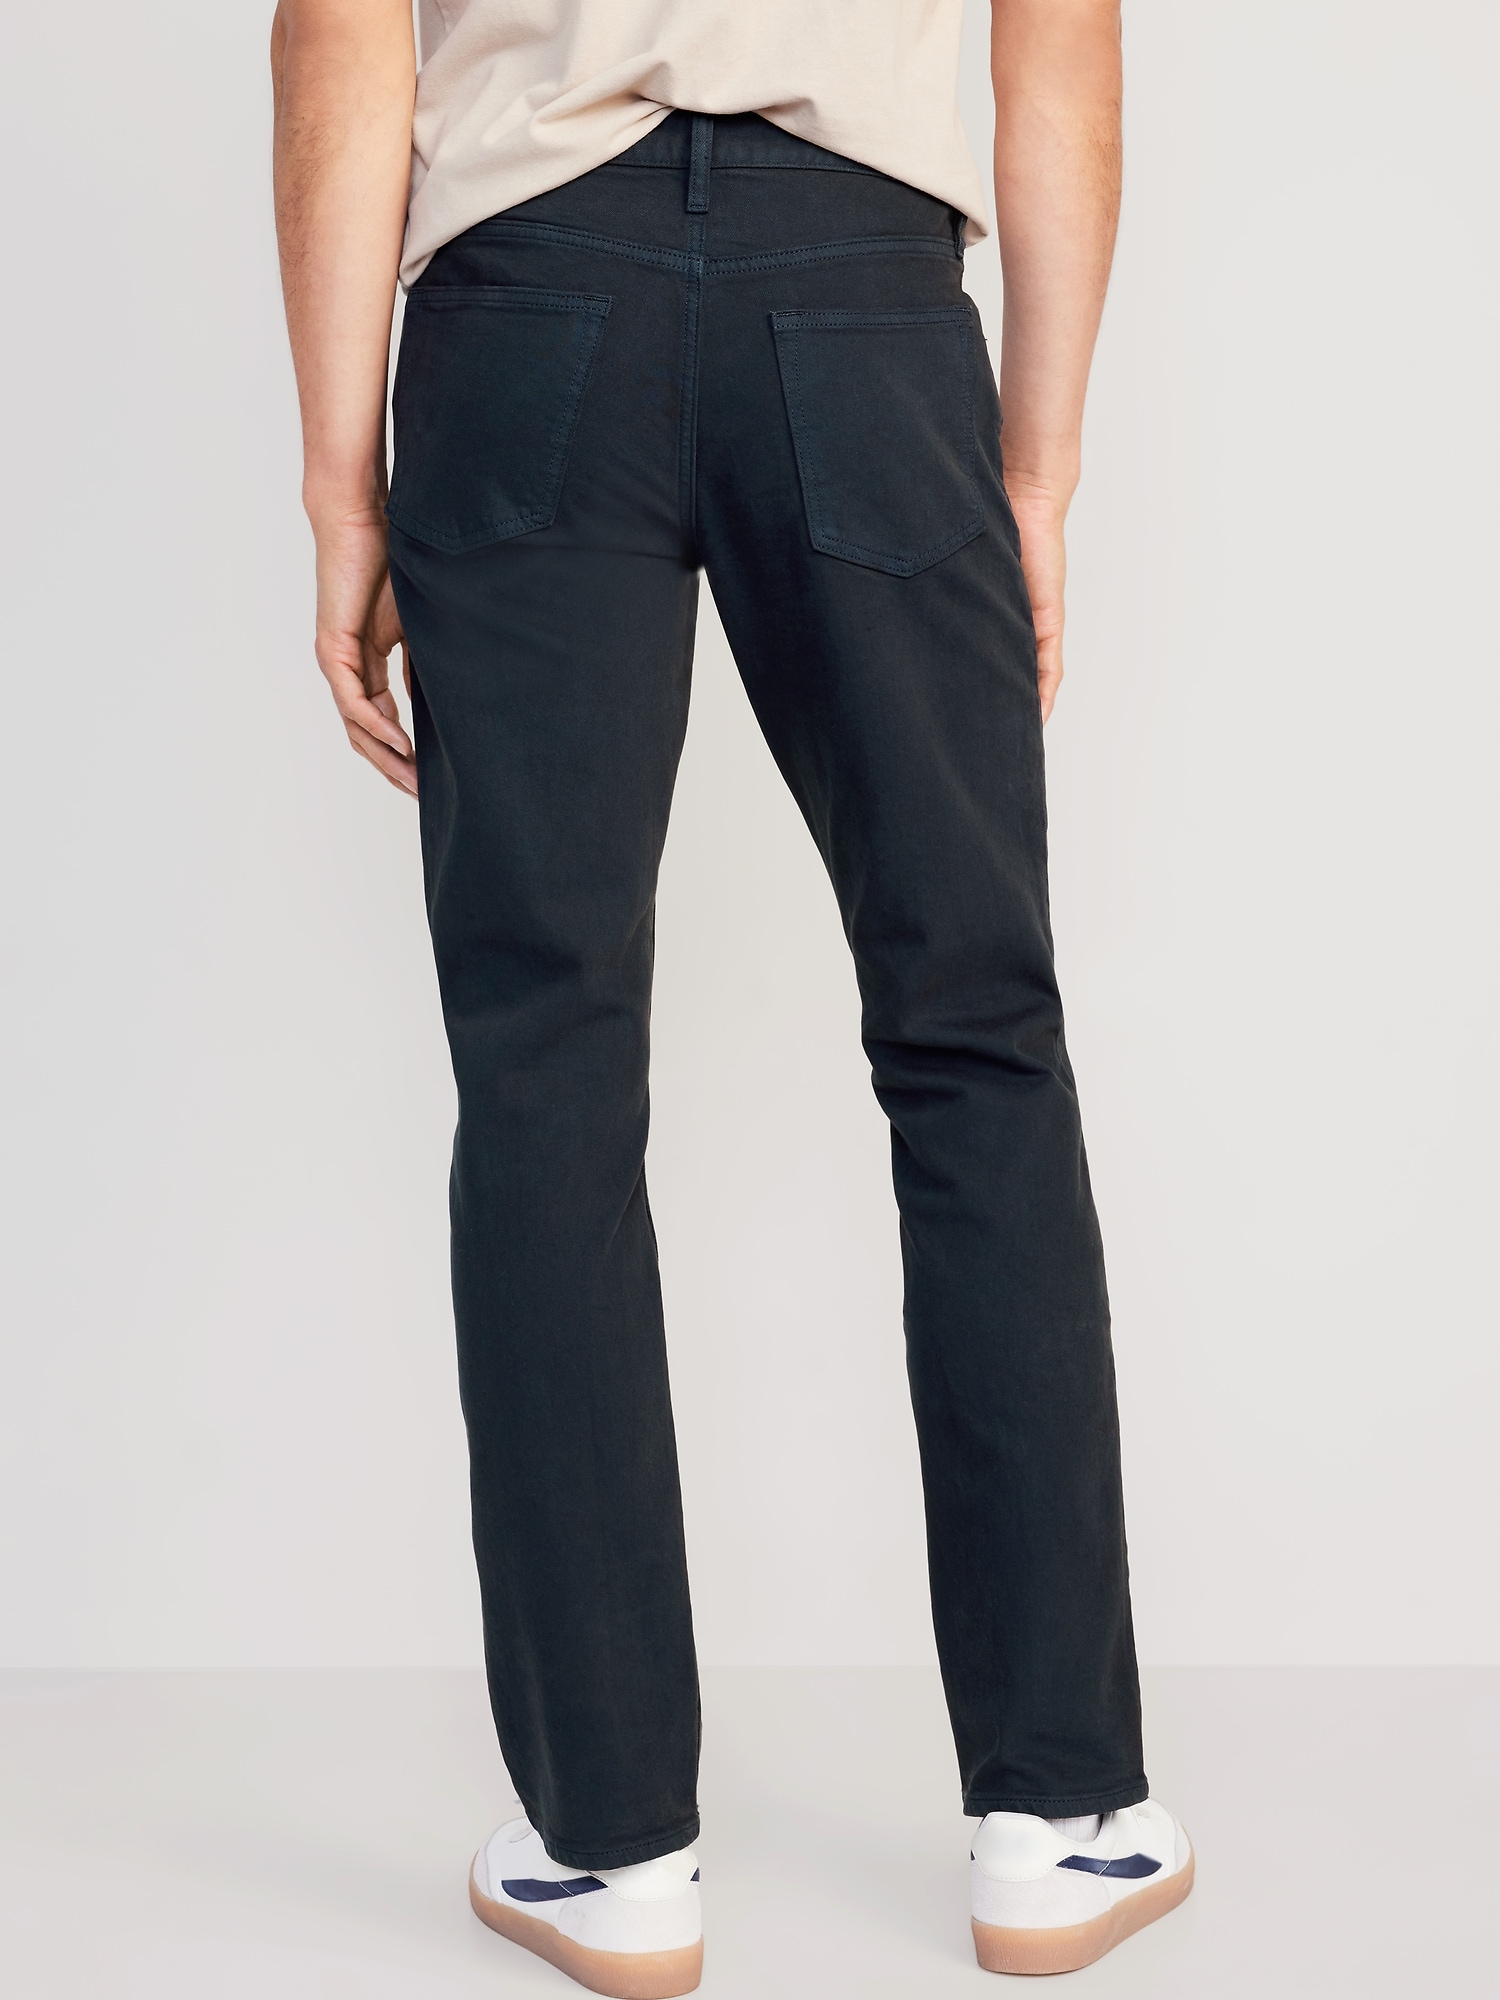 Straight Built-In Flex Twill Five-Pocket Pants